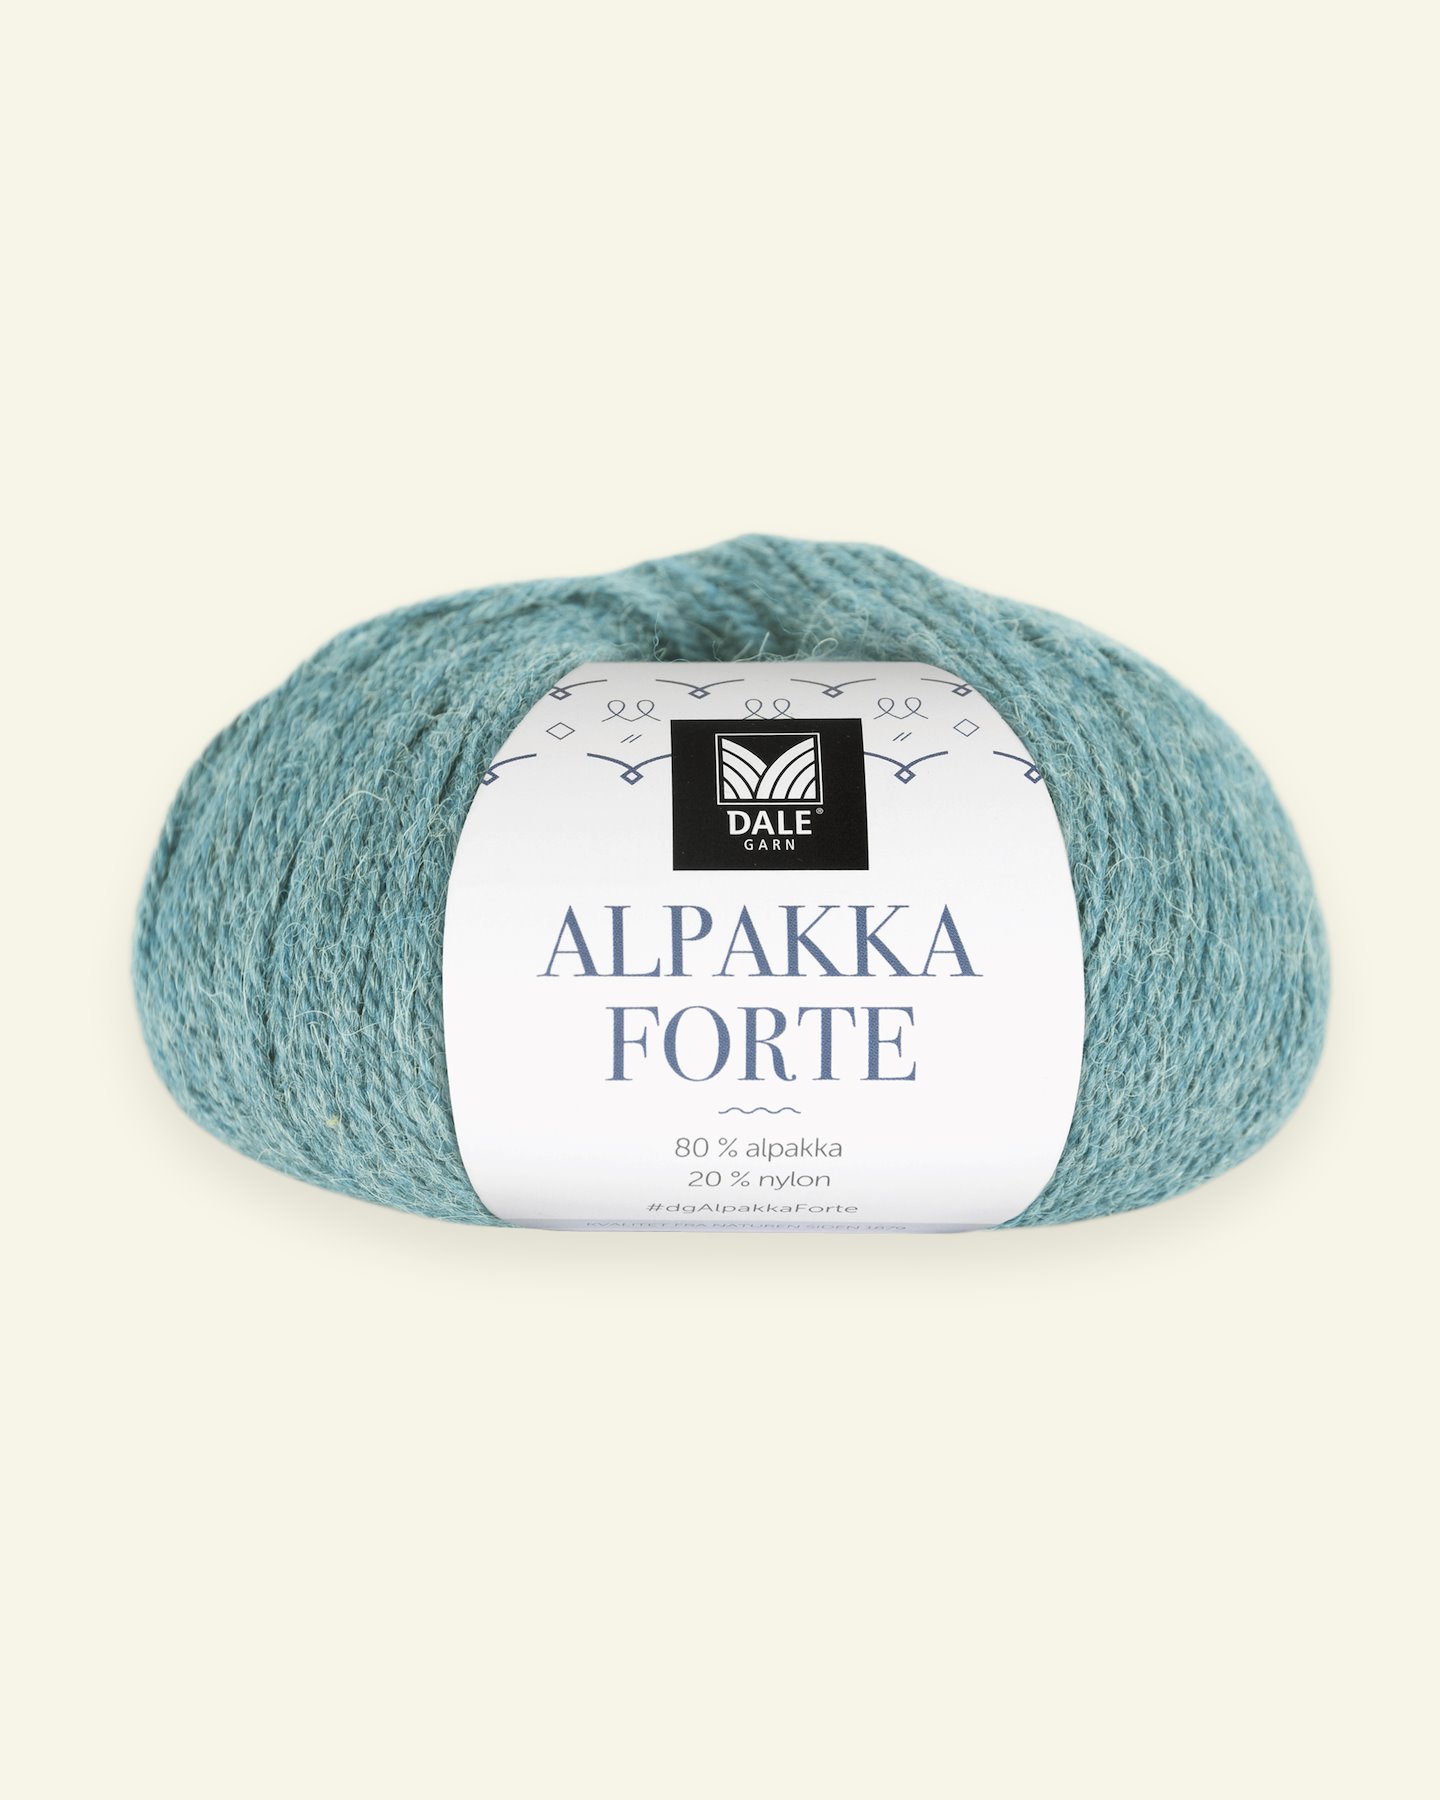 Dale Garn, Alpakawolle "Alpakka Forte", aqua mel. (713) 90000446_pack